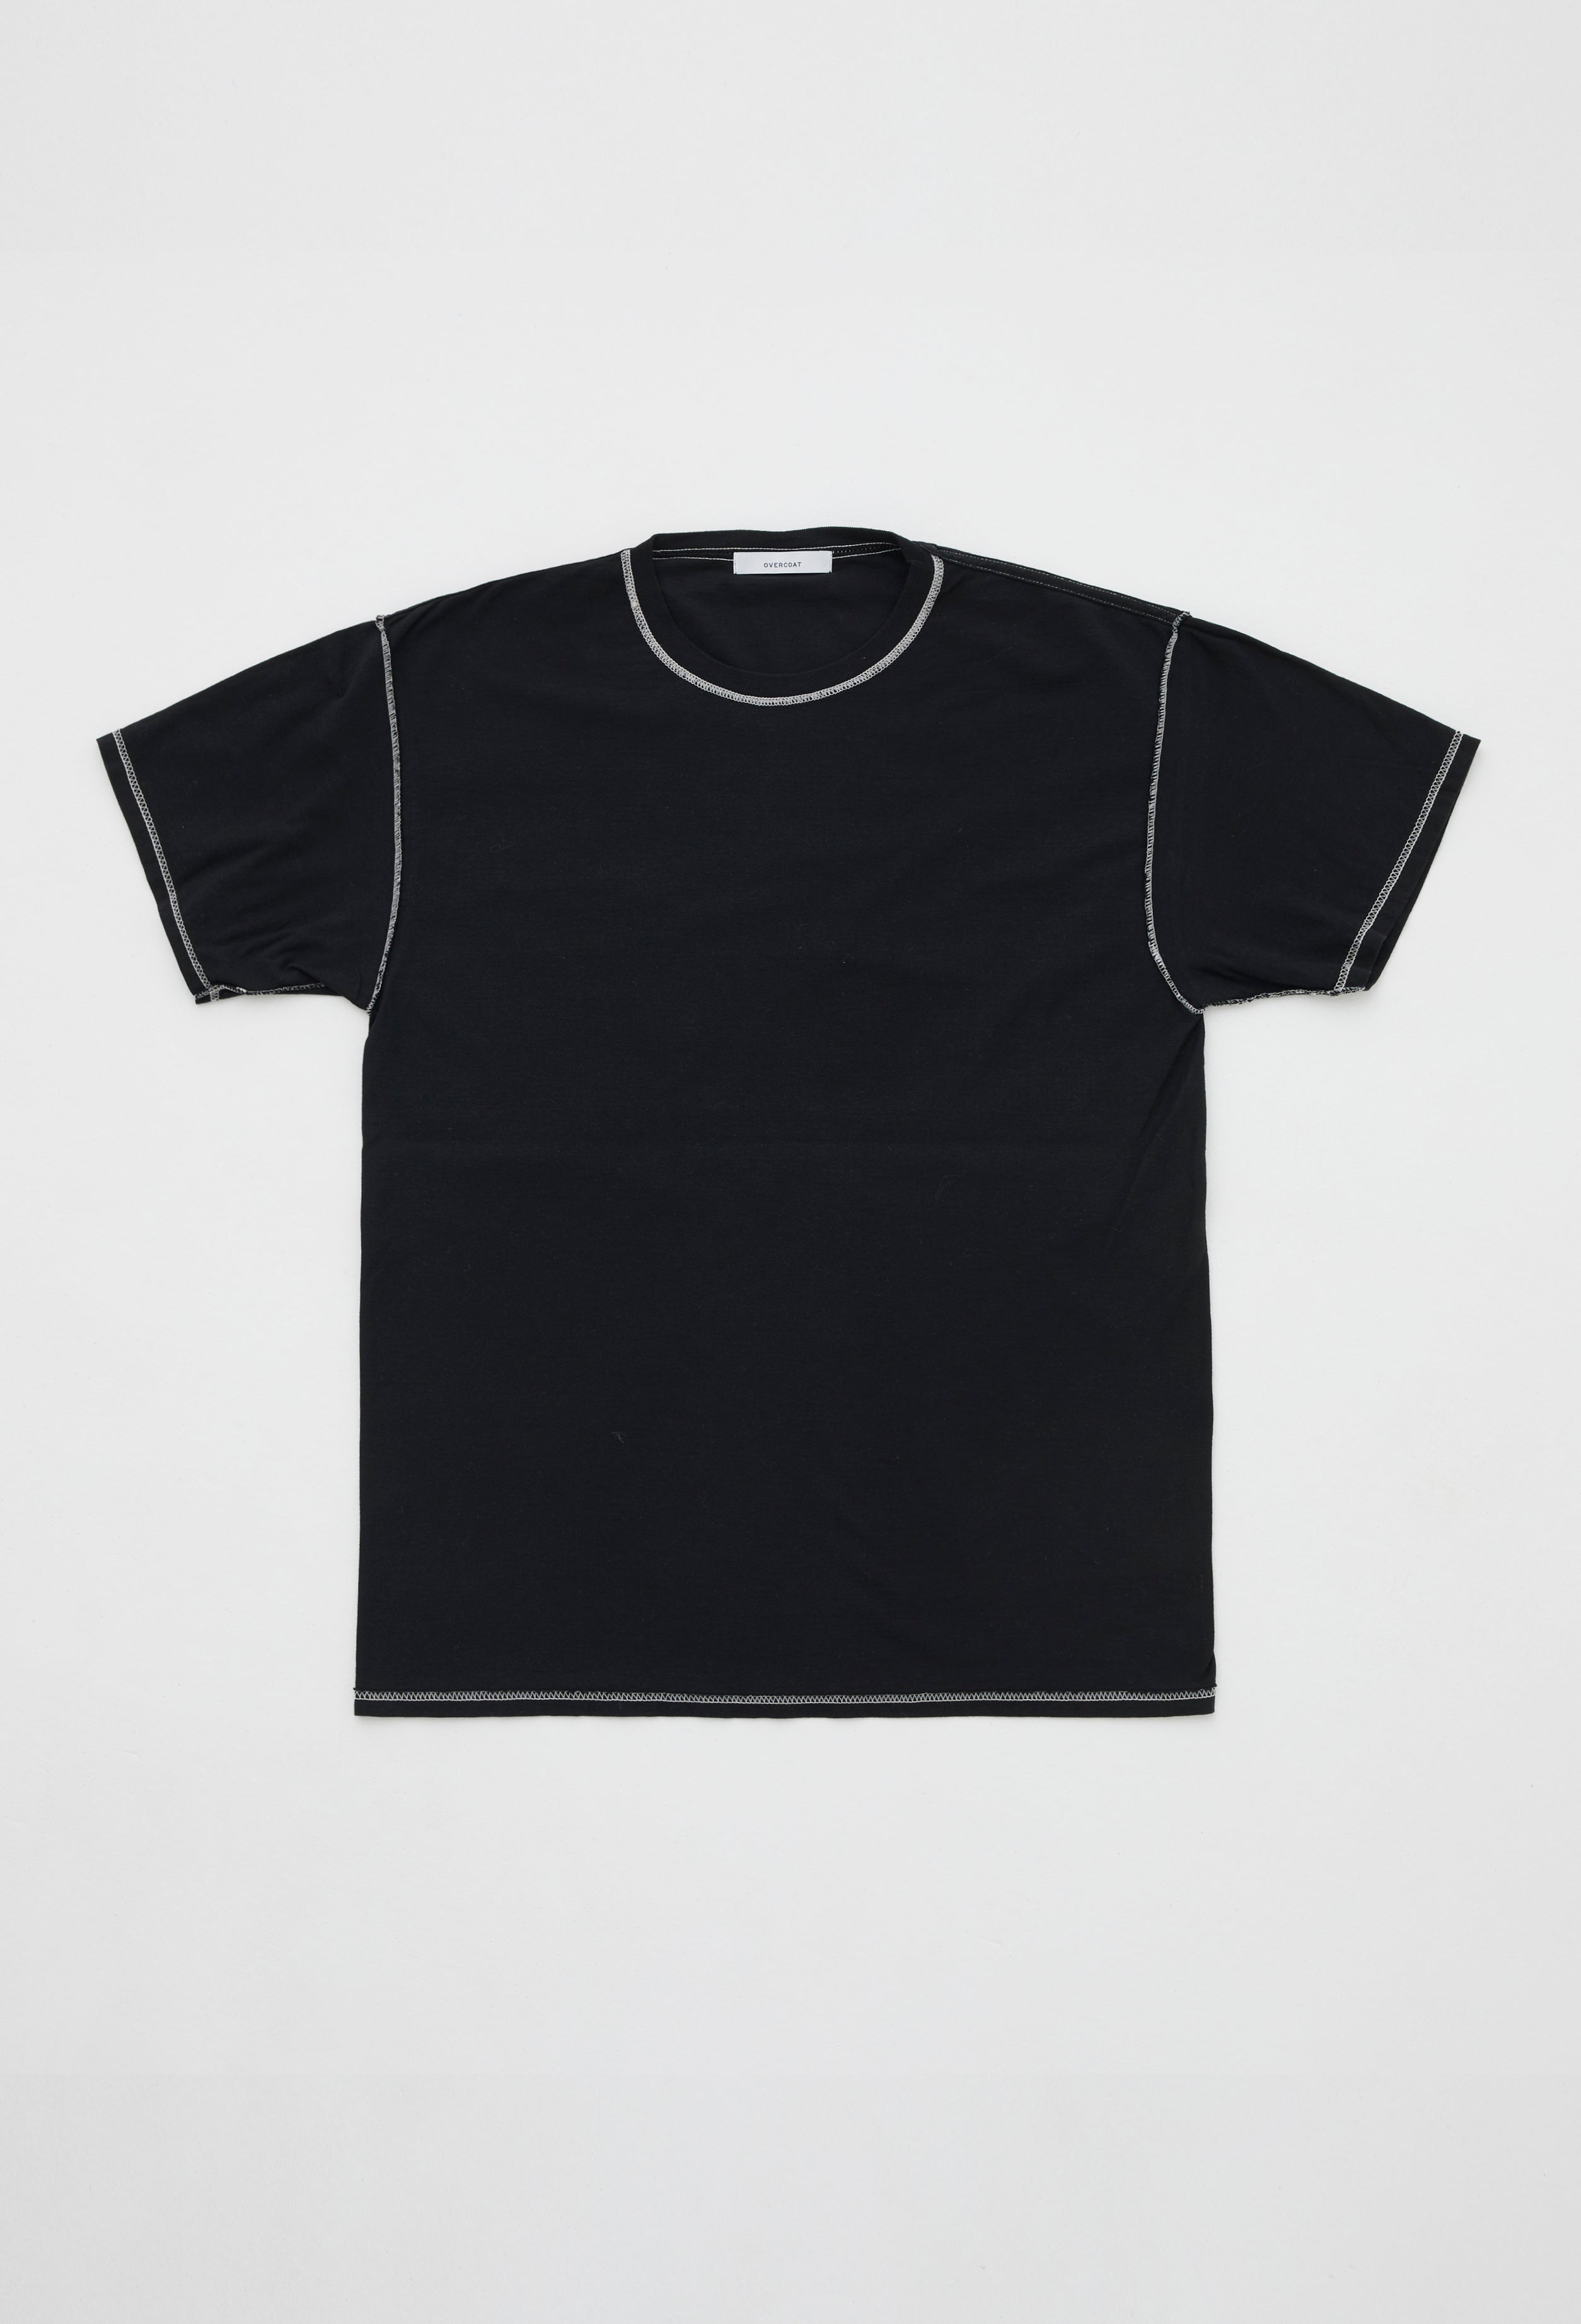 Overcoat x Richard Kern Collaboration T-shirt in Black